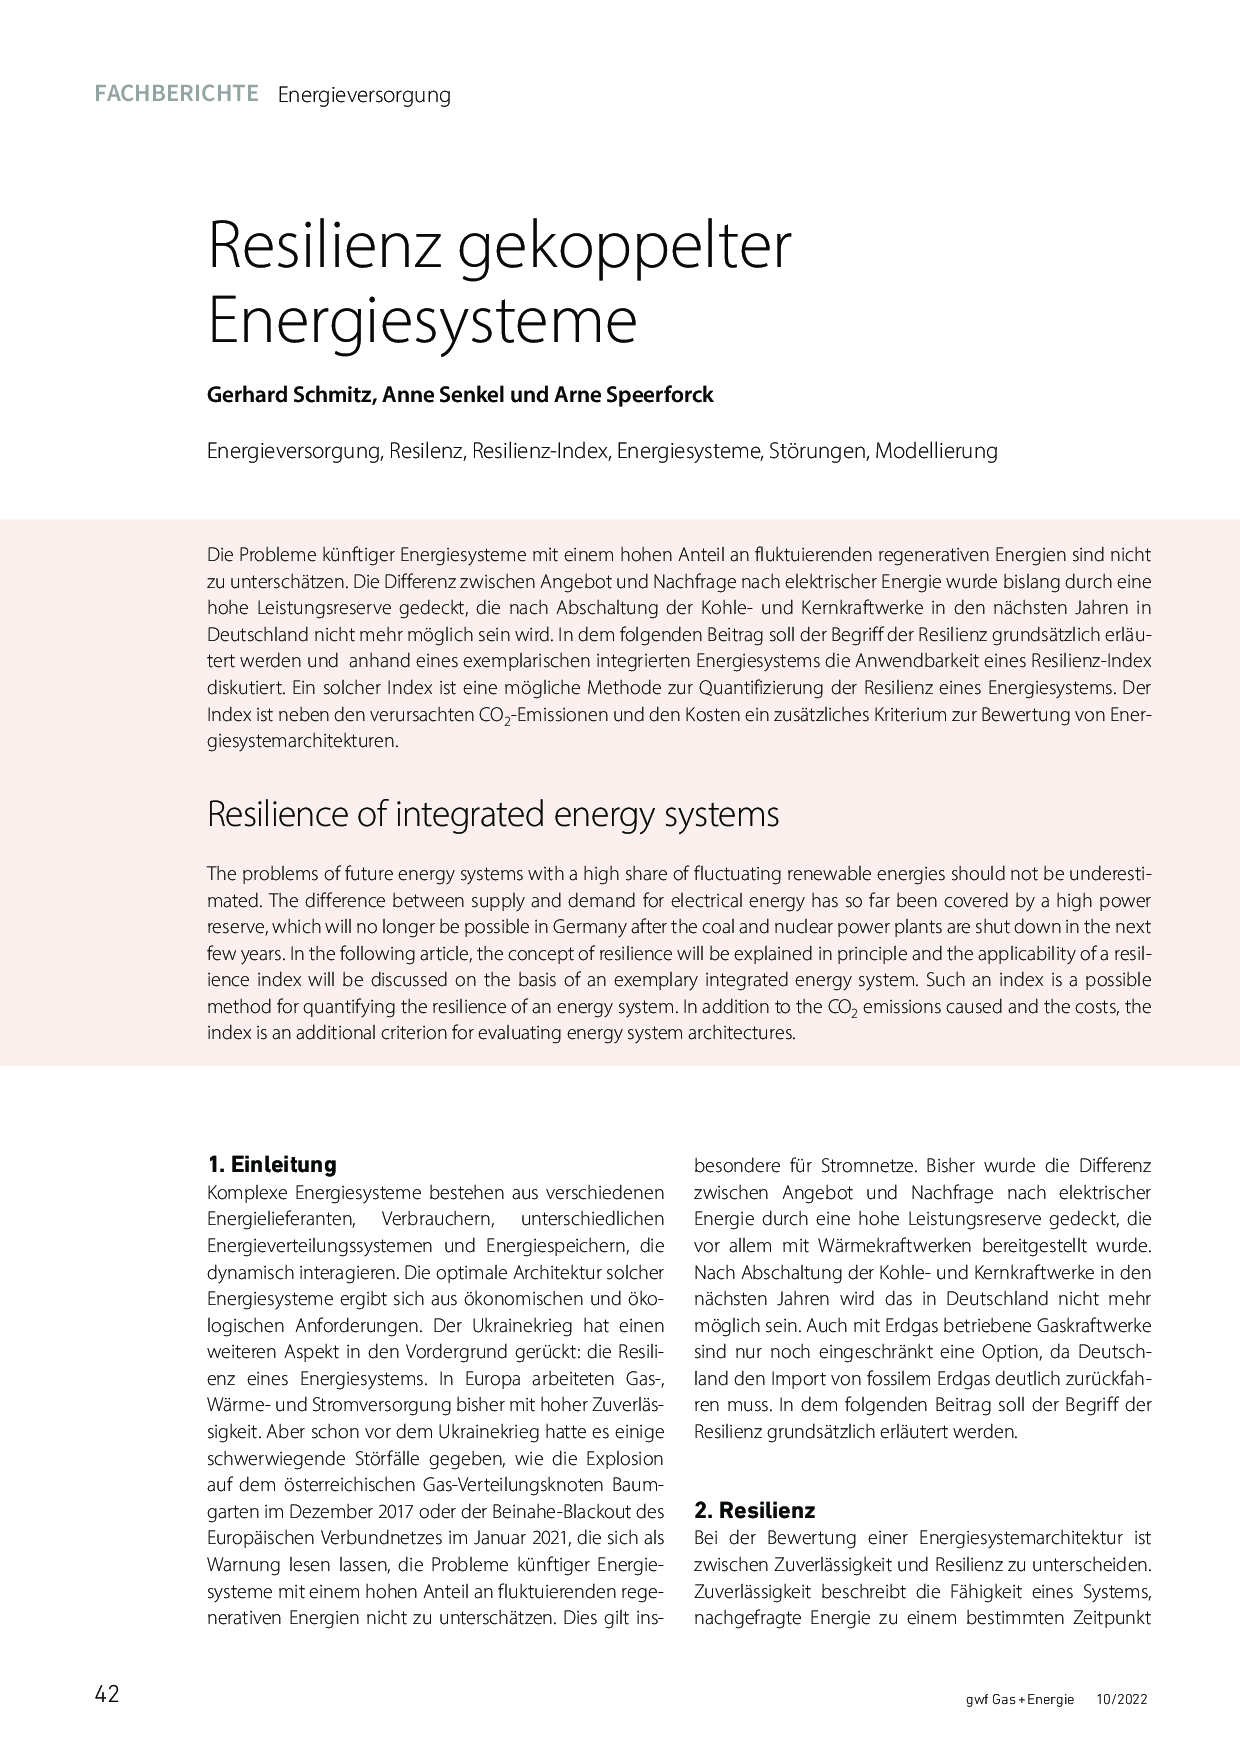 Resilienz gekoppelter Energiesysteme